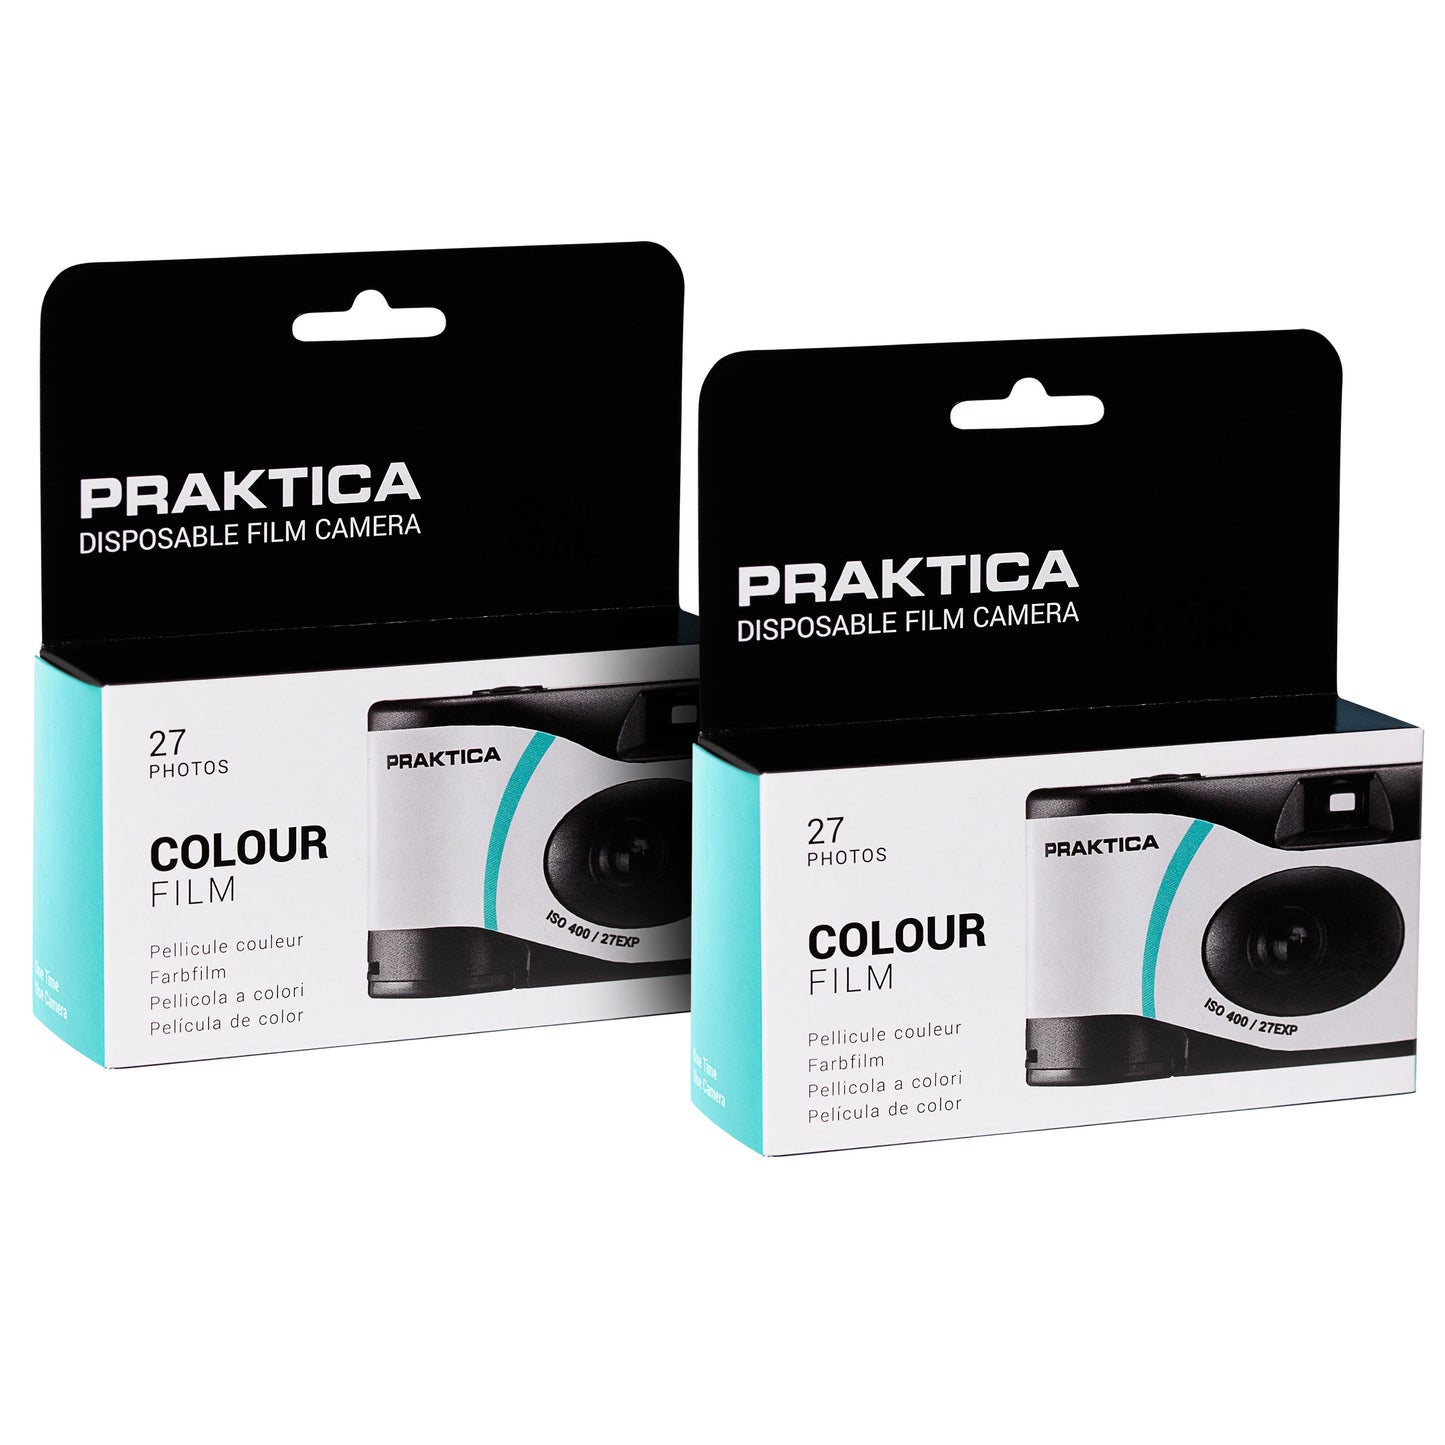 PRAKTICA Luxmedia 35mm Disposable Film Camera with Flash & 27 Exposure ISO400 Film - maplin.co.uk